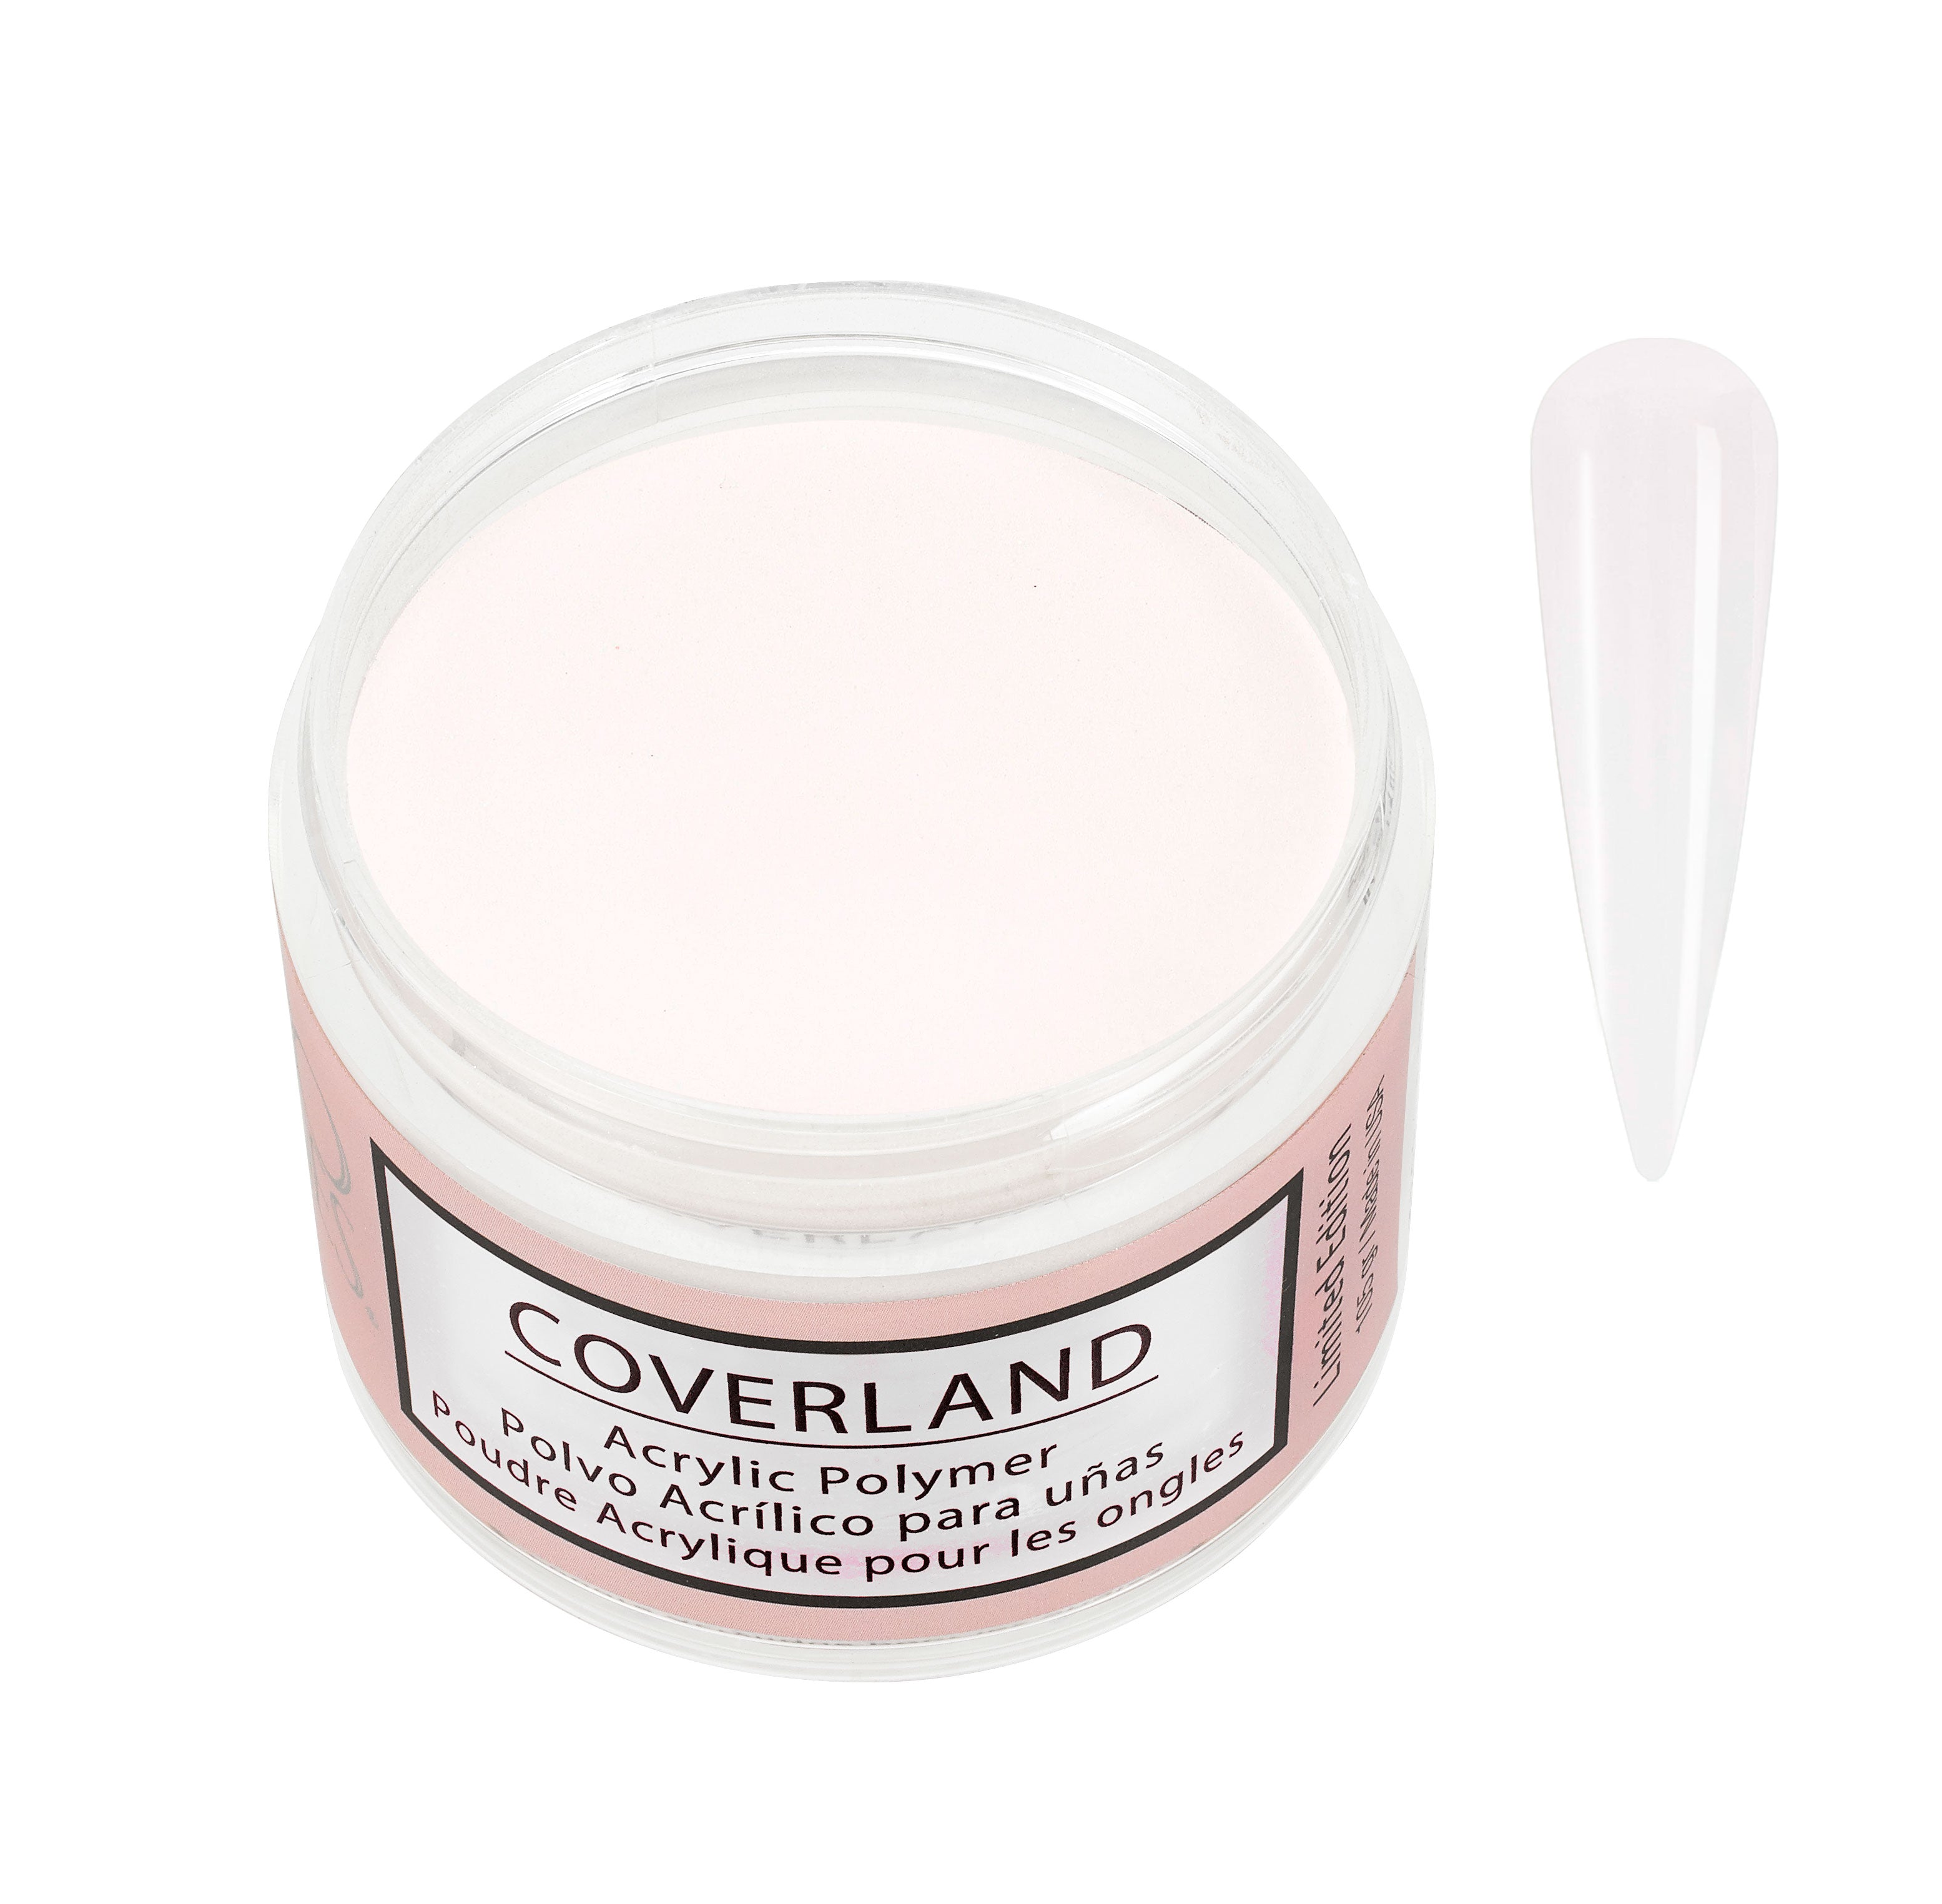 Coverland Acrylic Powder 3.5oz 